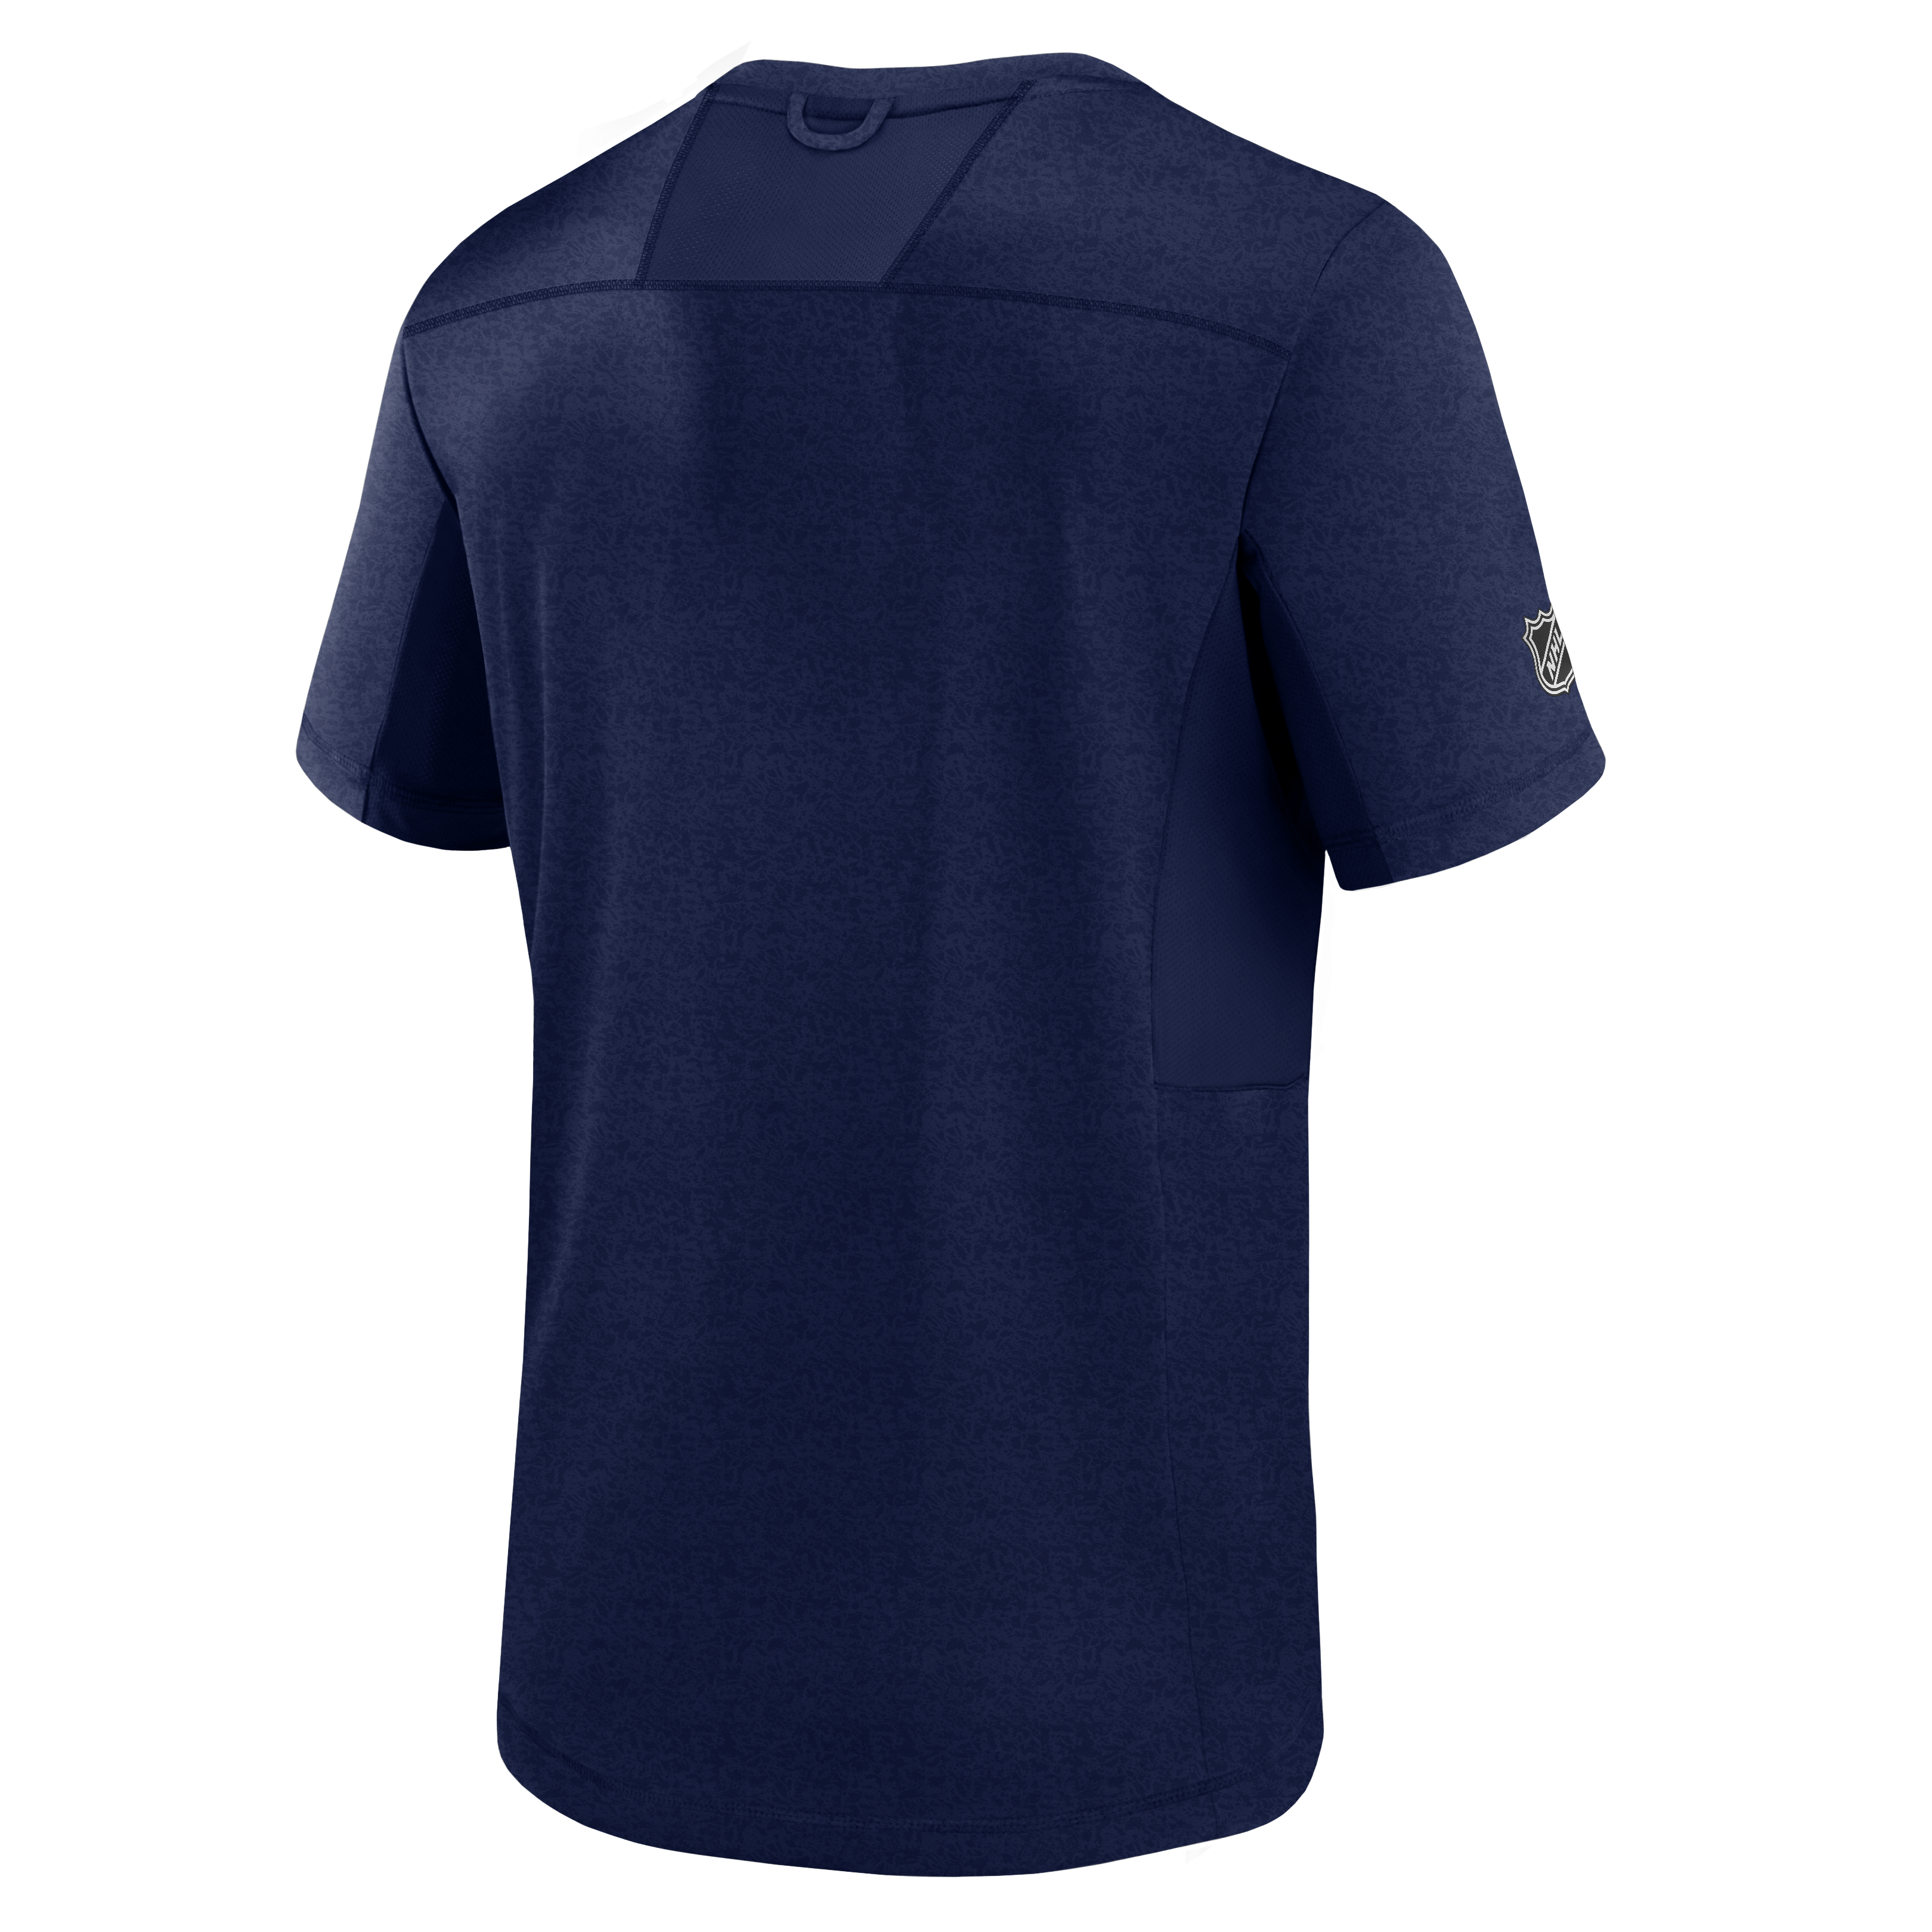 Florida Panthers Fanatics Authentic Pro Primary Logo Mesh T-Shirt - Navy